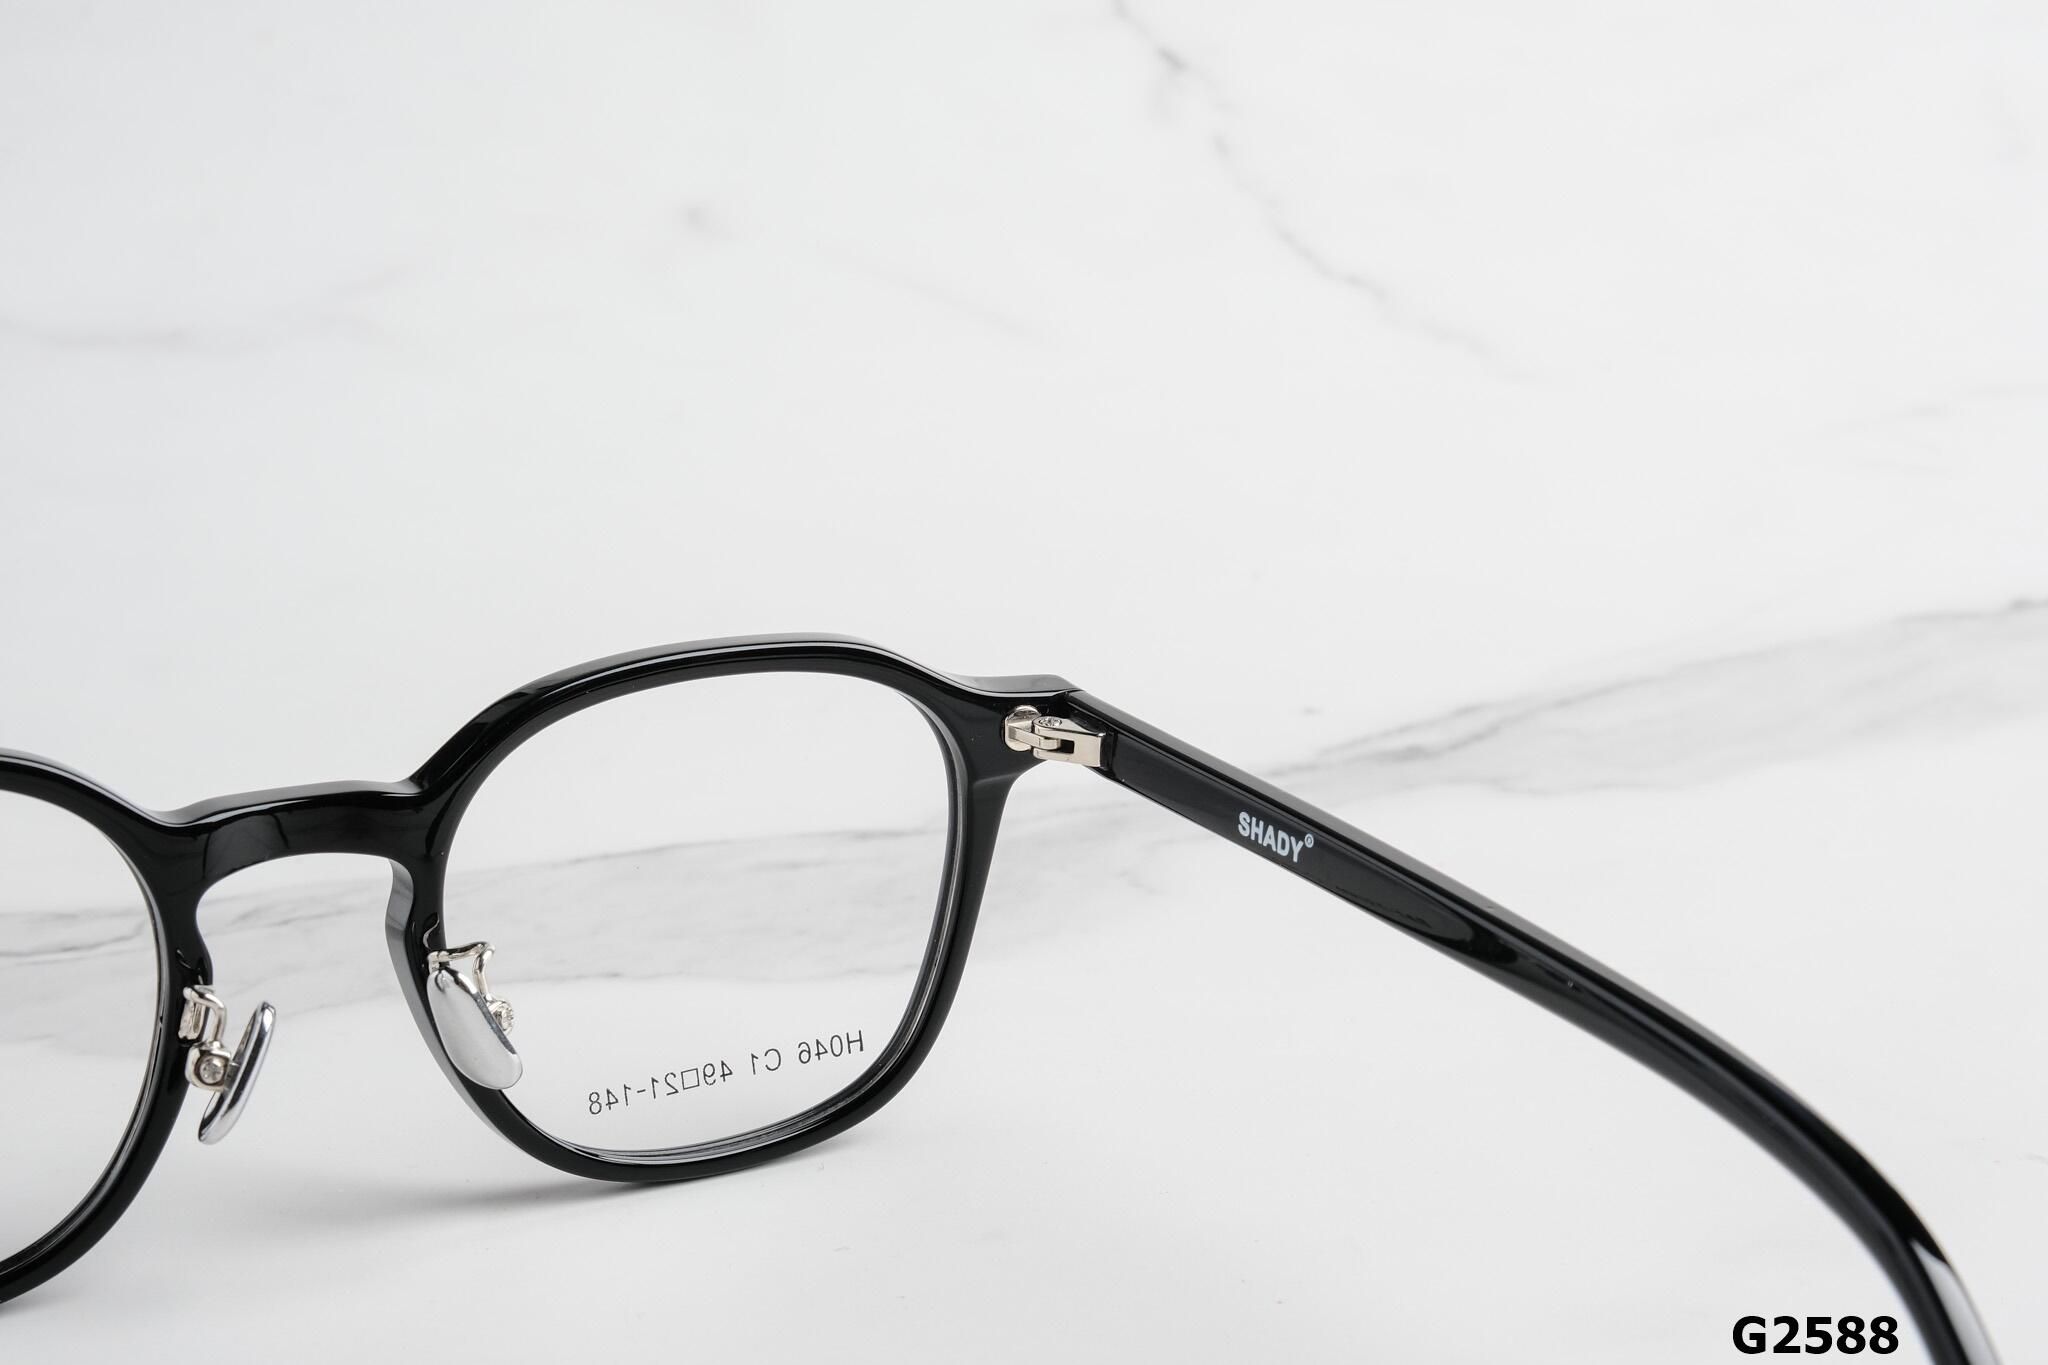  SHADY Eyewear - Glasses - G2588 